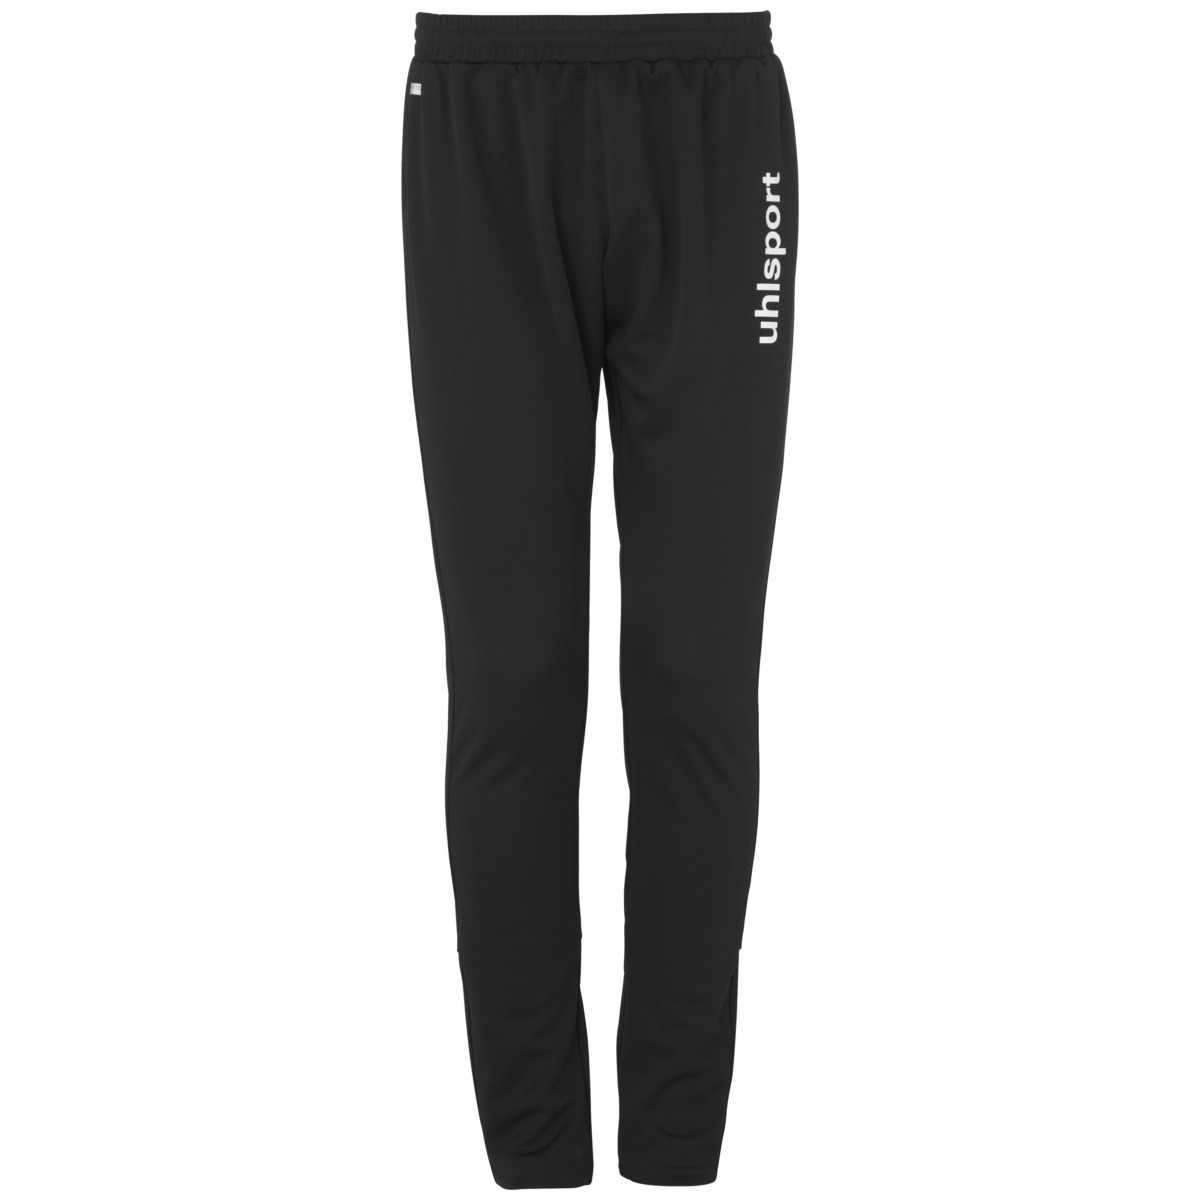 goalkeeper pants & shorts | uhlsport goalkeeper shop